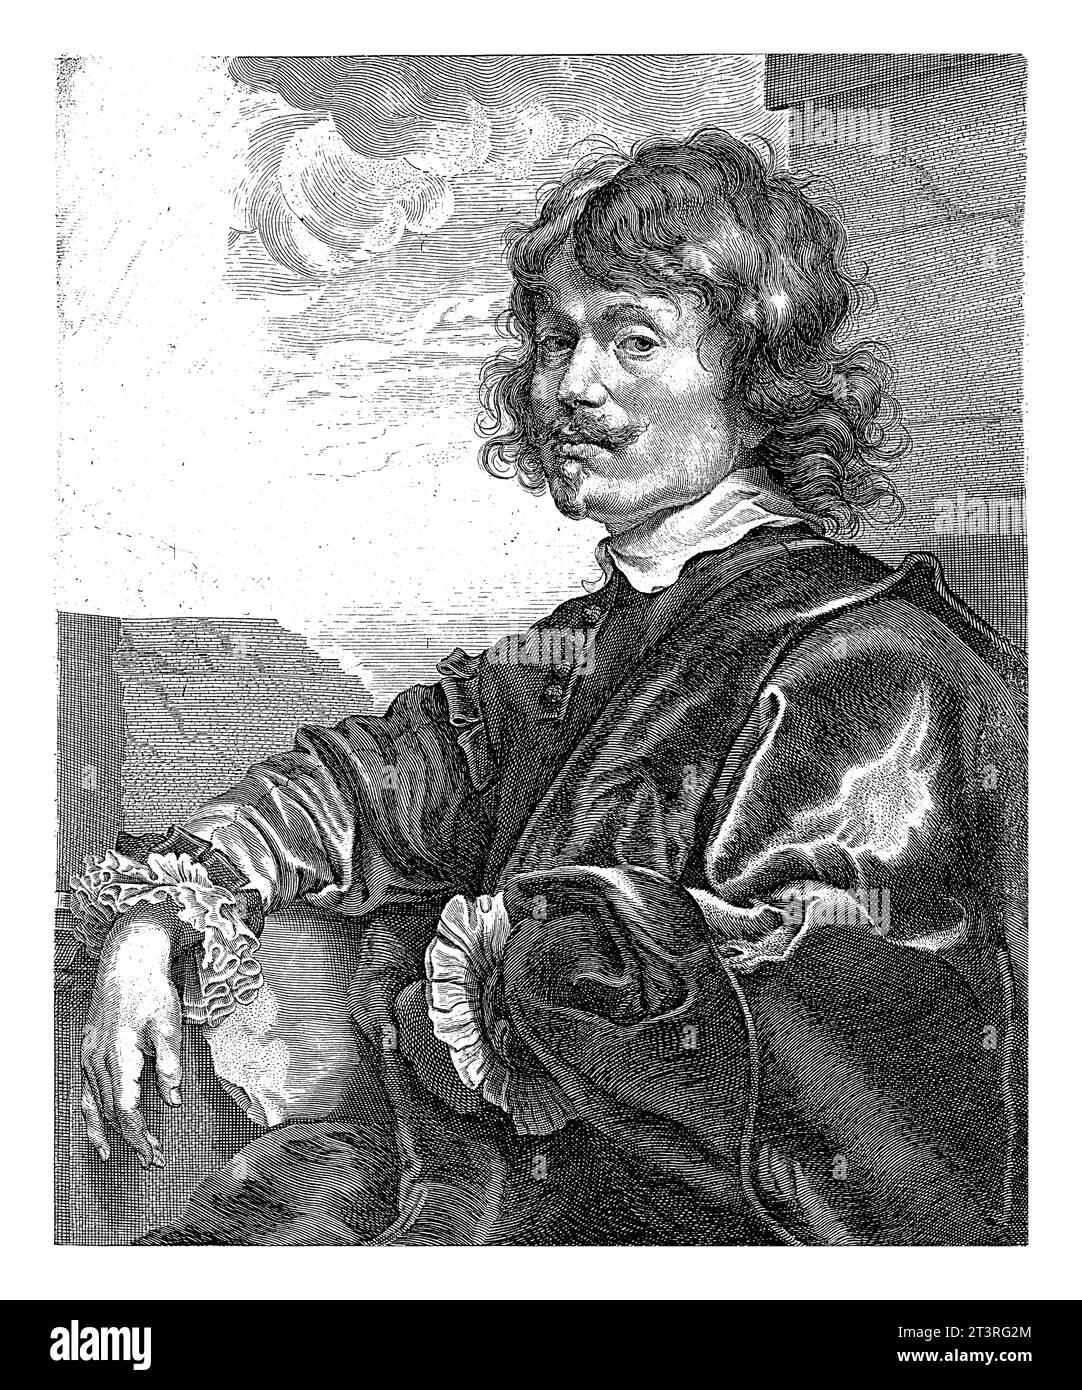 Portrait of Adriaen Hanneman, Robert van Voerst, after Anthony van Dyck, 1625 - 1636 Portrait of the painter Adriaen Hanneman. Stock Photo